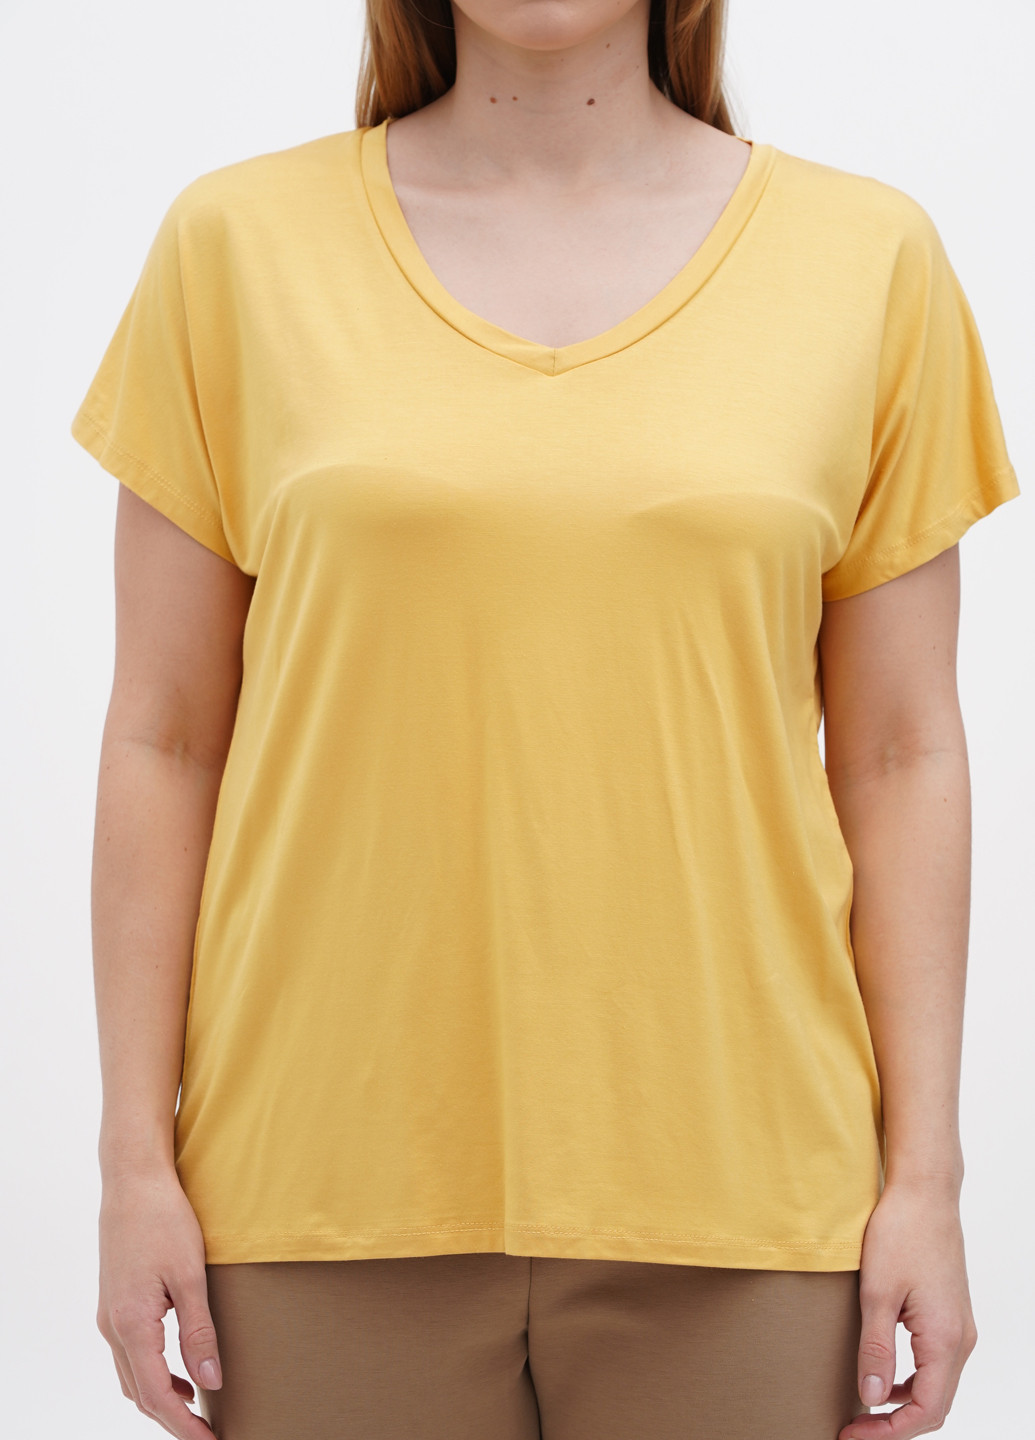 Жовта літня футболка Soyaconcept